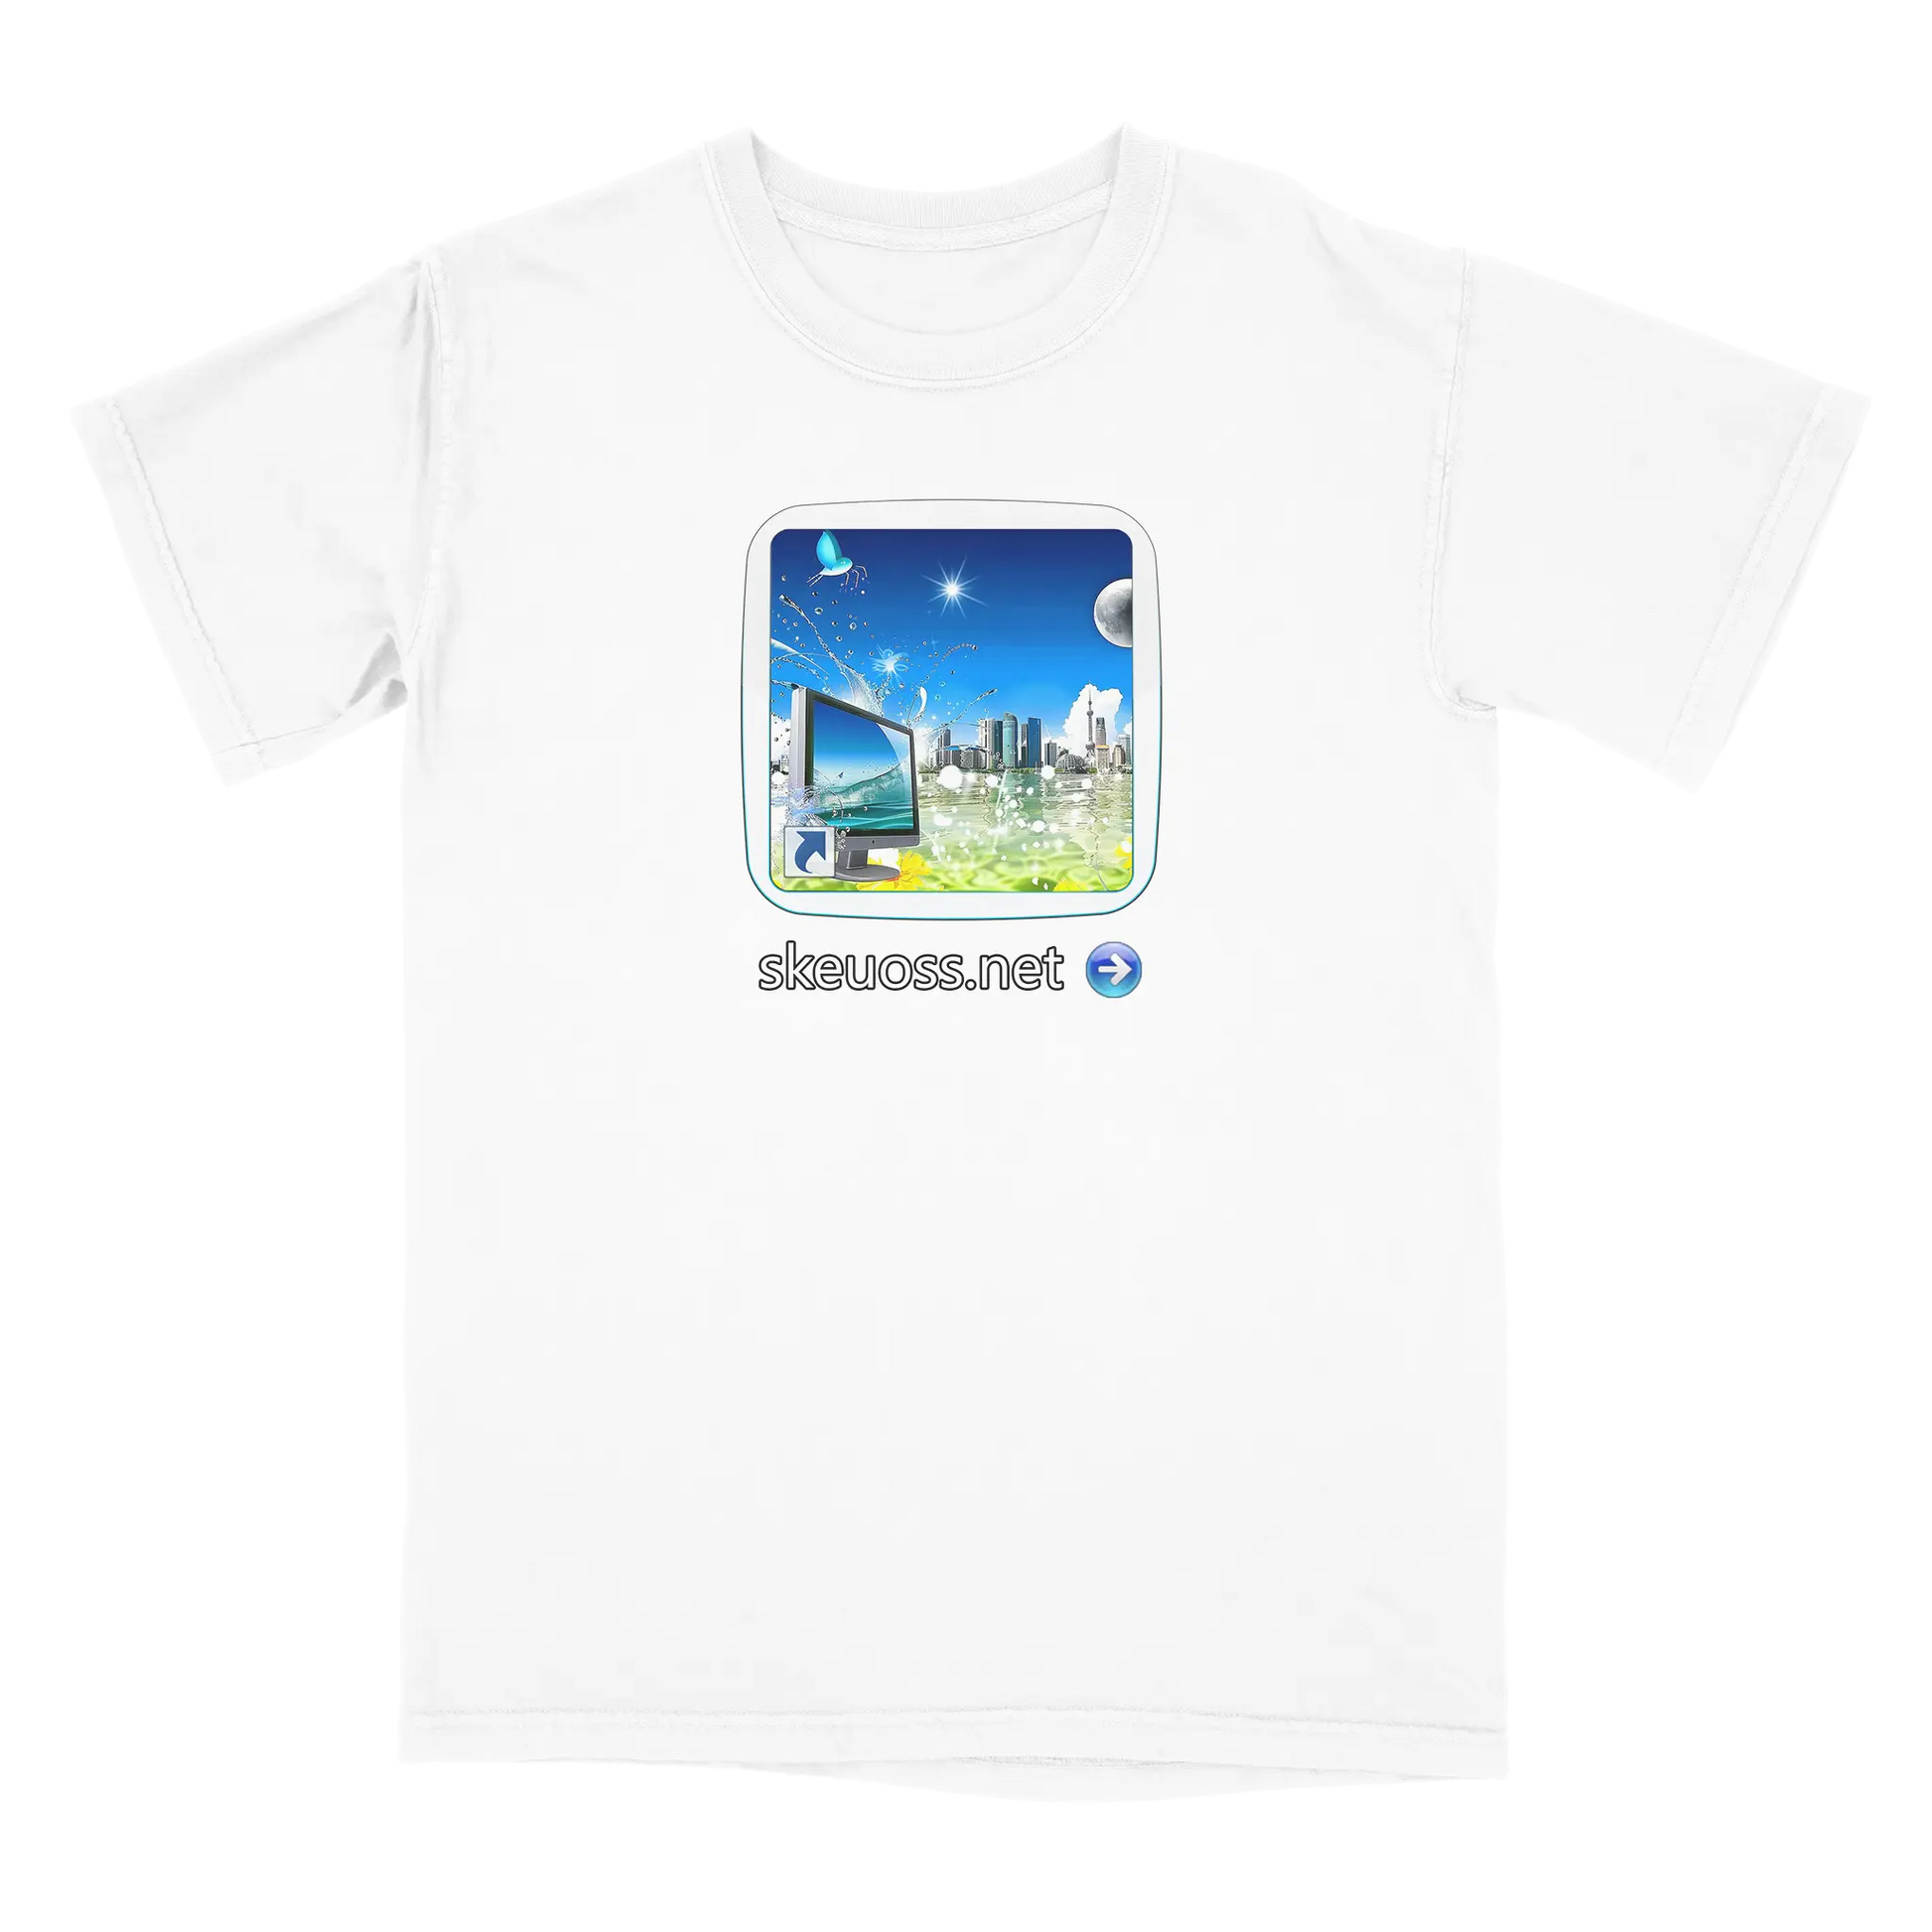 Frutiger Aero T-shirt - User Login Collection - User 390